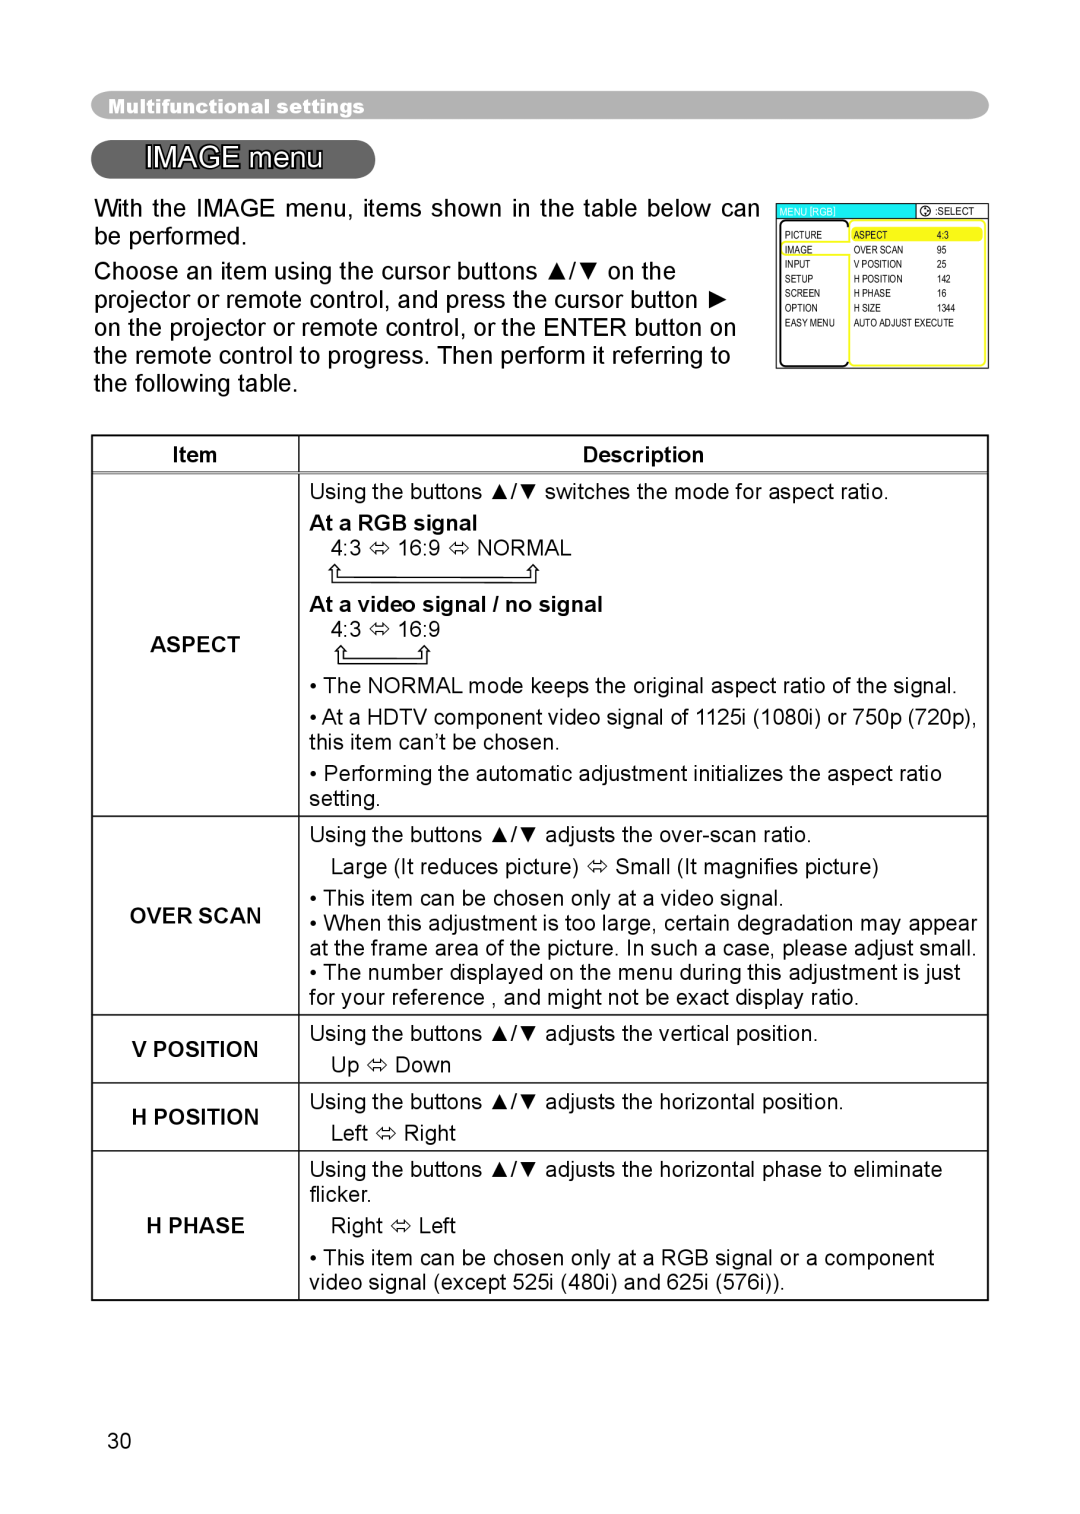 3M S15 manual IMAGE menu, Aspect Over Scan V Position H Position H Phase, Description, At a RGB signal 